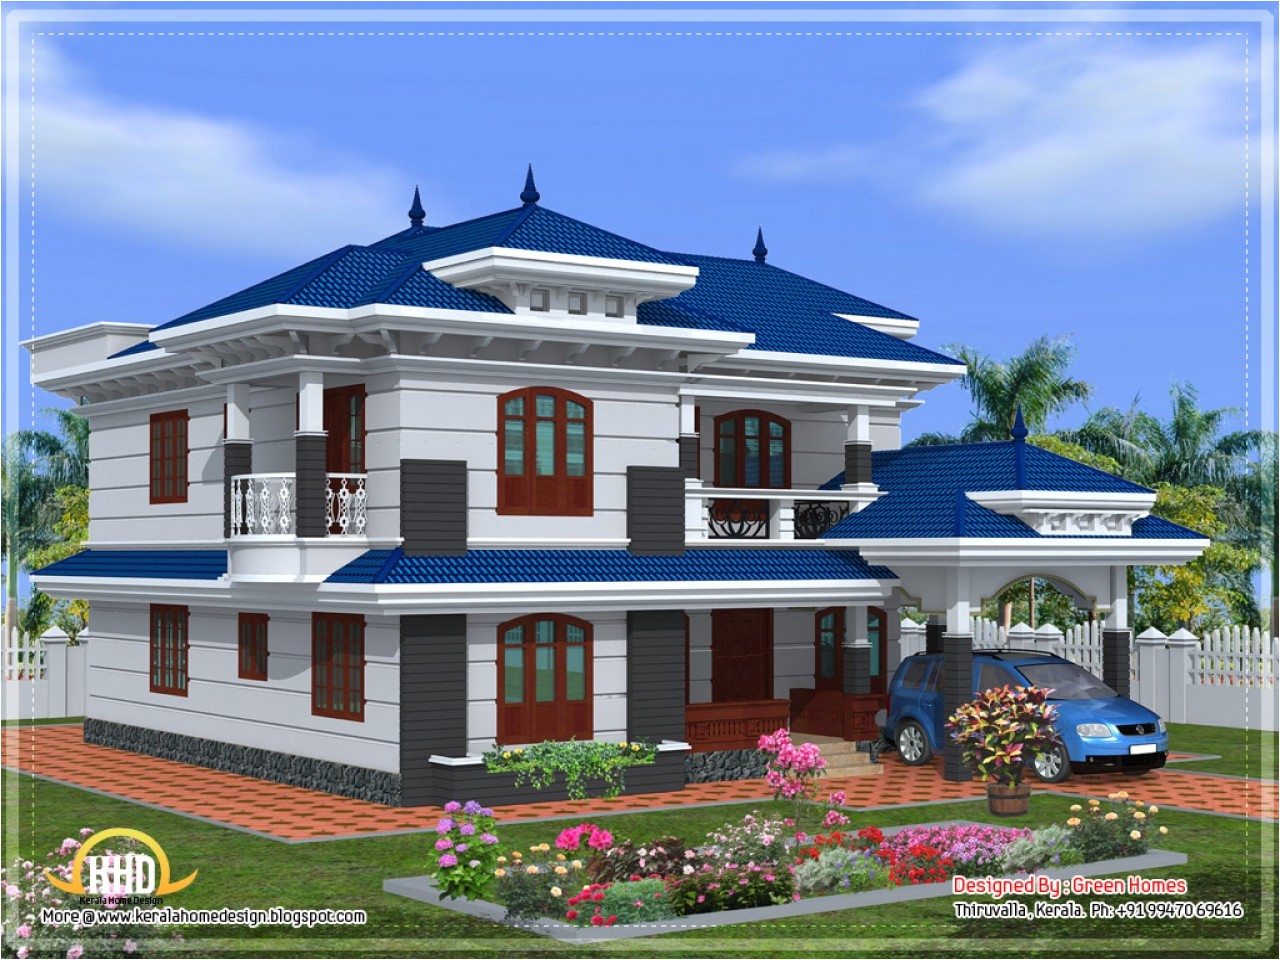 New Kerala Home Plans Beautiful House Designs In Kerala the Most Beautiful